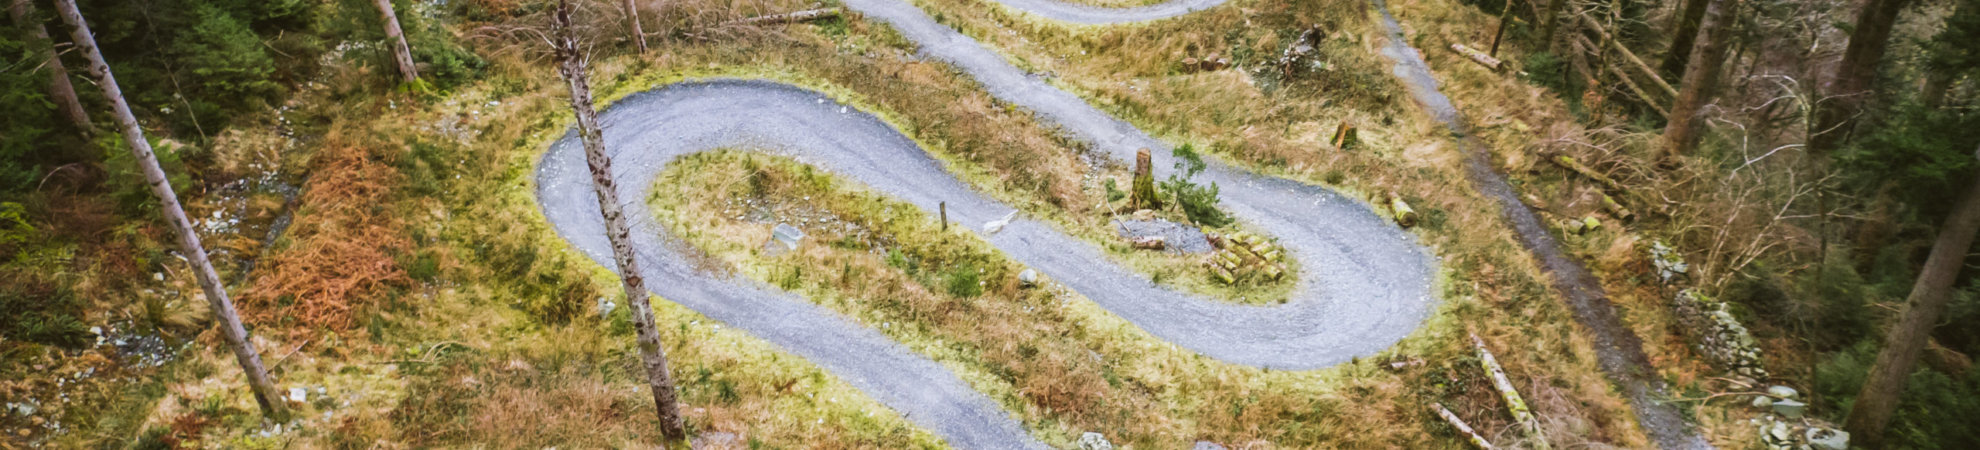 Mountain biking in North Wales DroneCoedyBrenin-0030 MB Wales